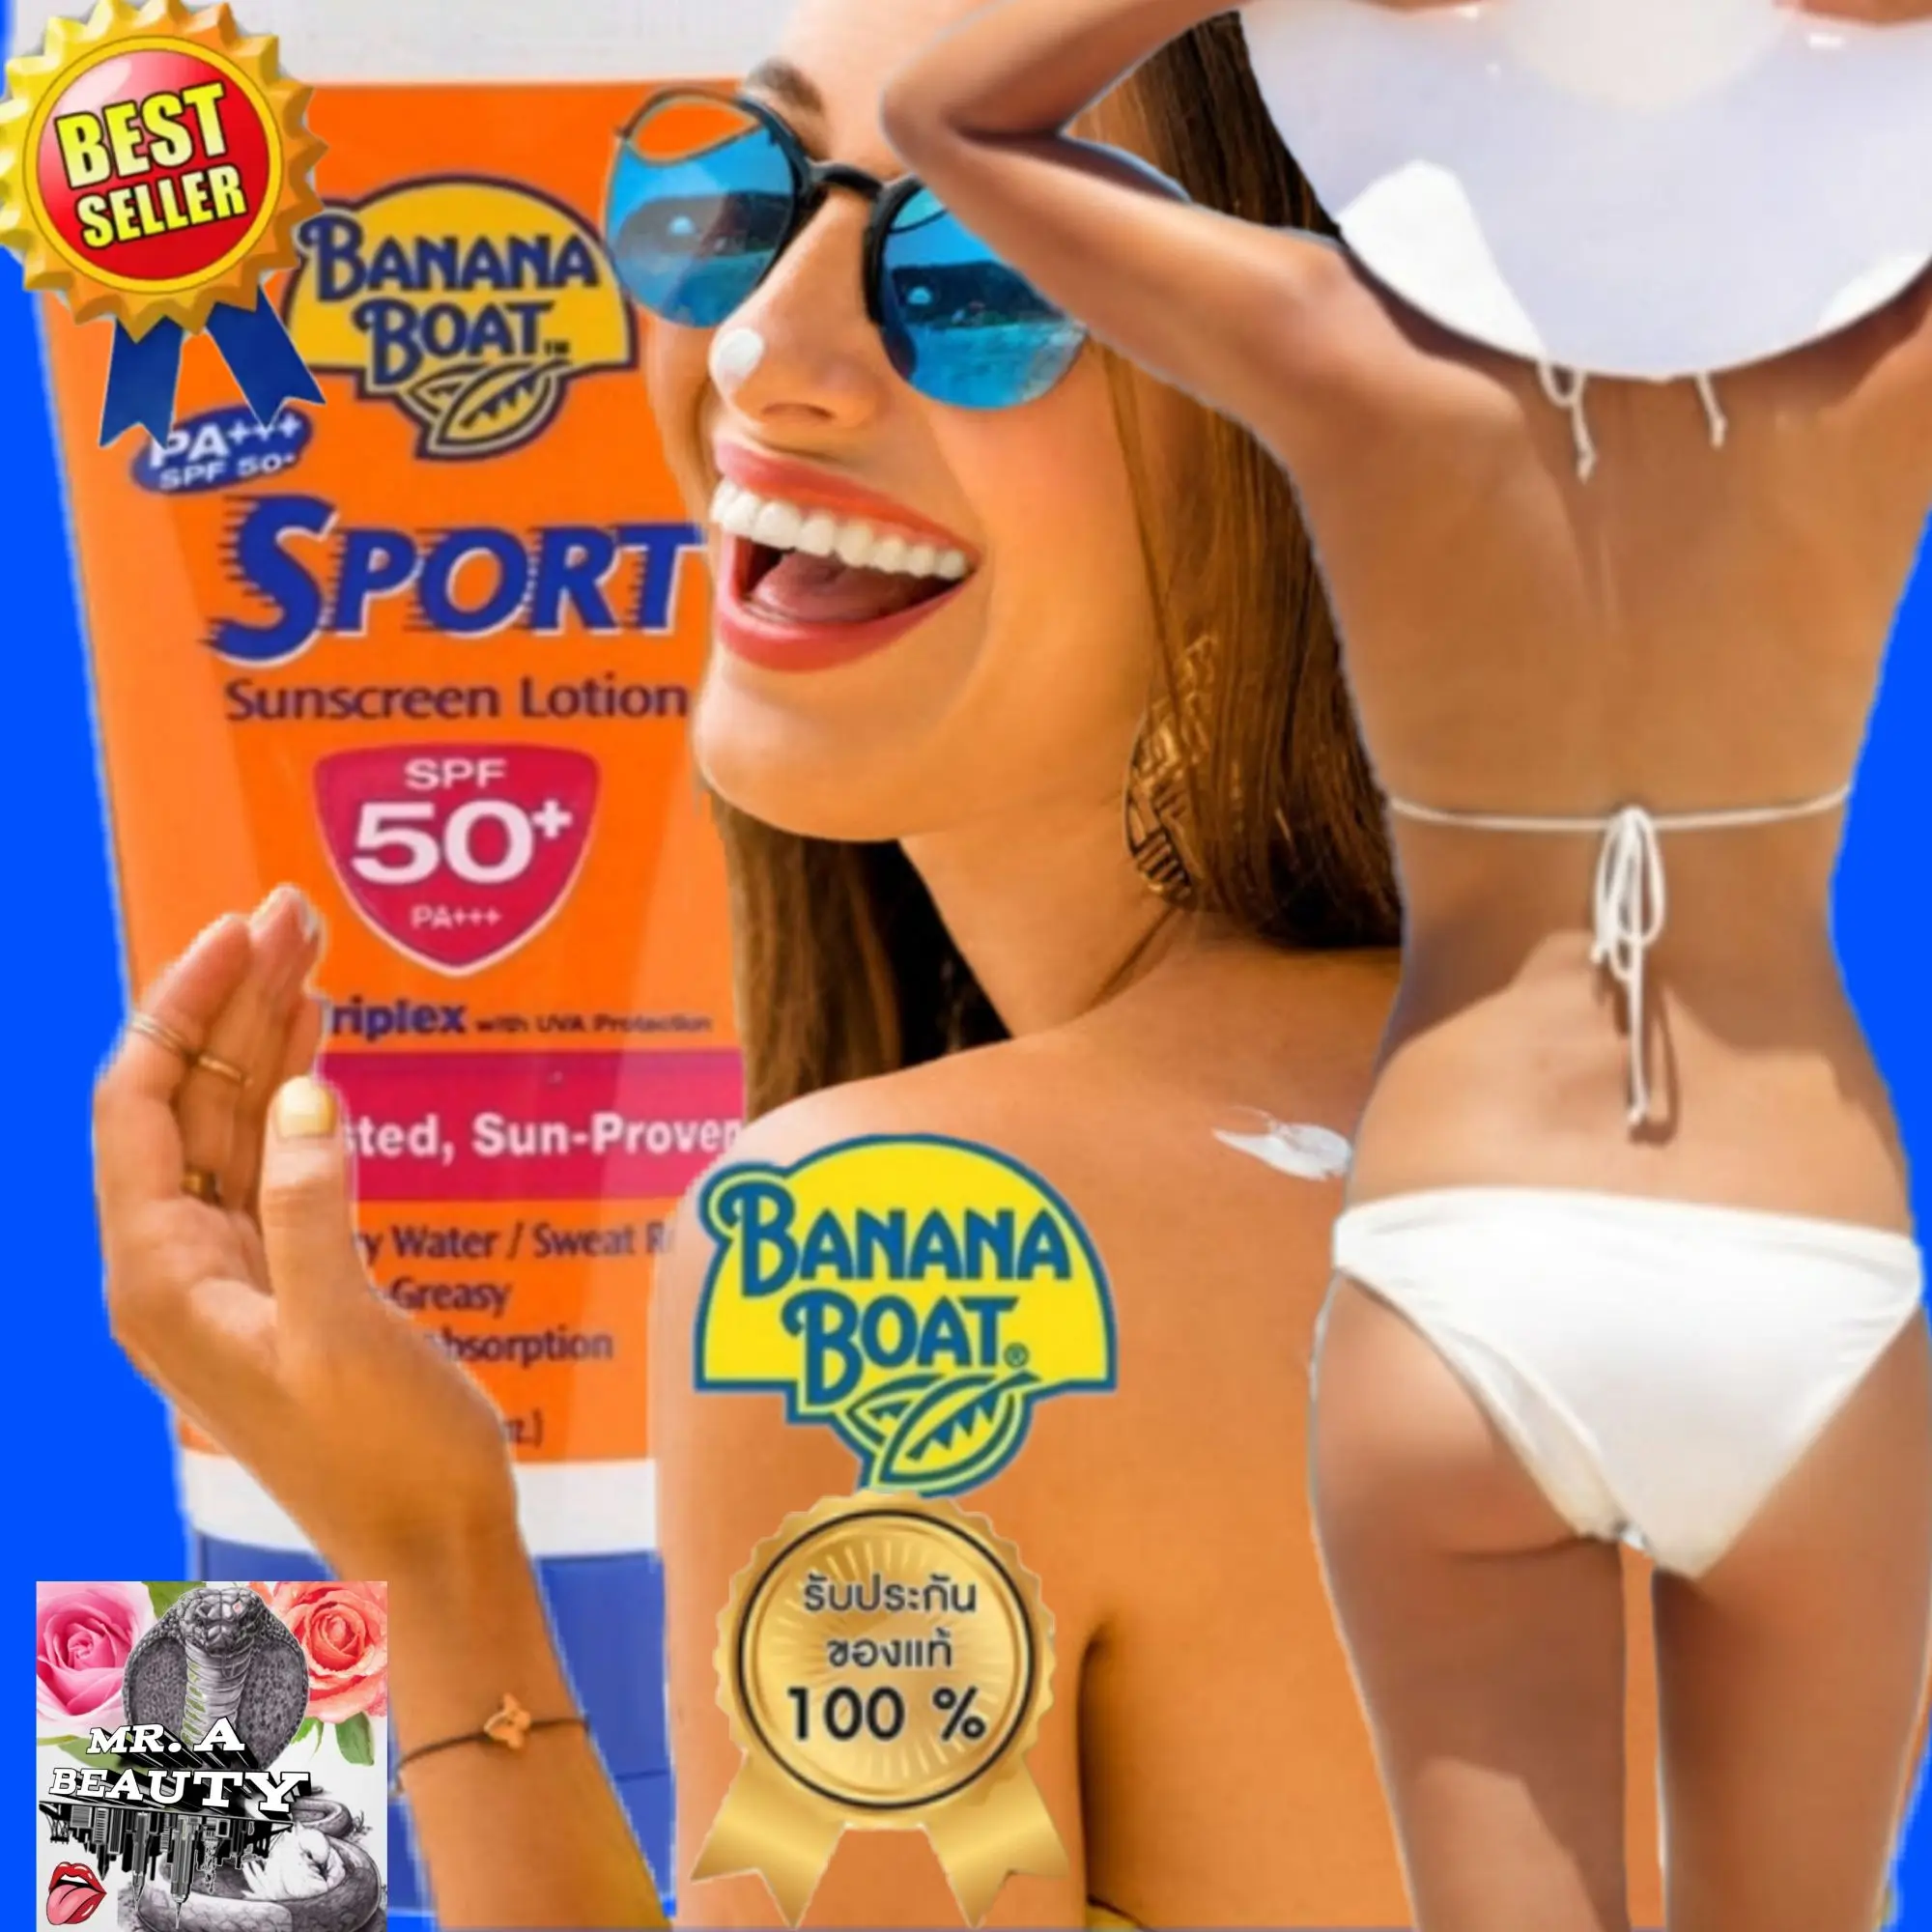 Banana Boat Sports Sunscreen Lotion Spf 50+PA+++ 90ml. บานาน่า โบ๊ท โลชั่นครีมกันแดด (หมดอายุ02/2022และหมดอายุ09/2022)